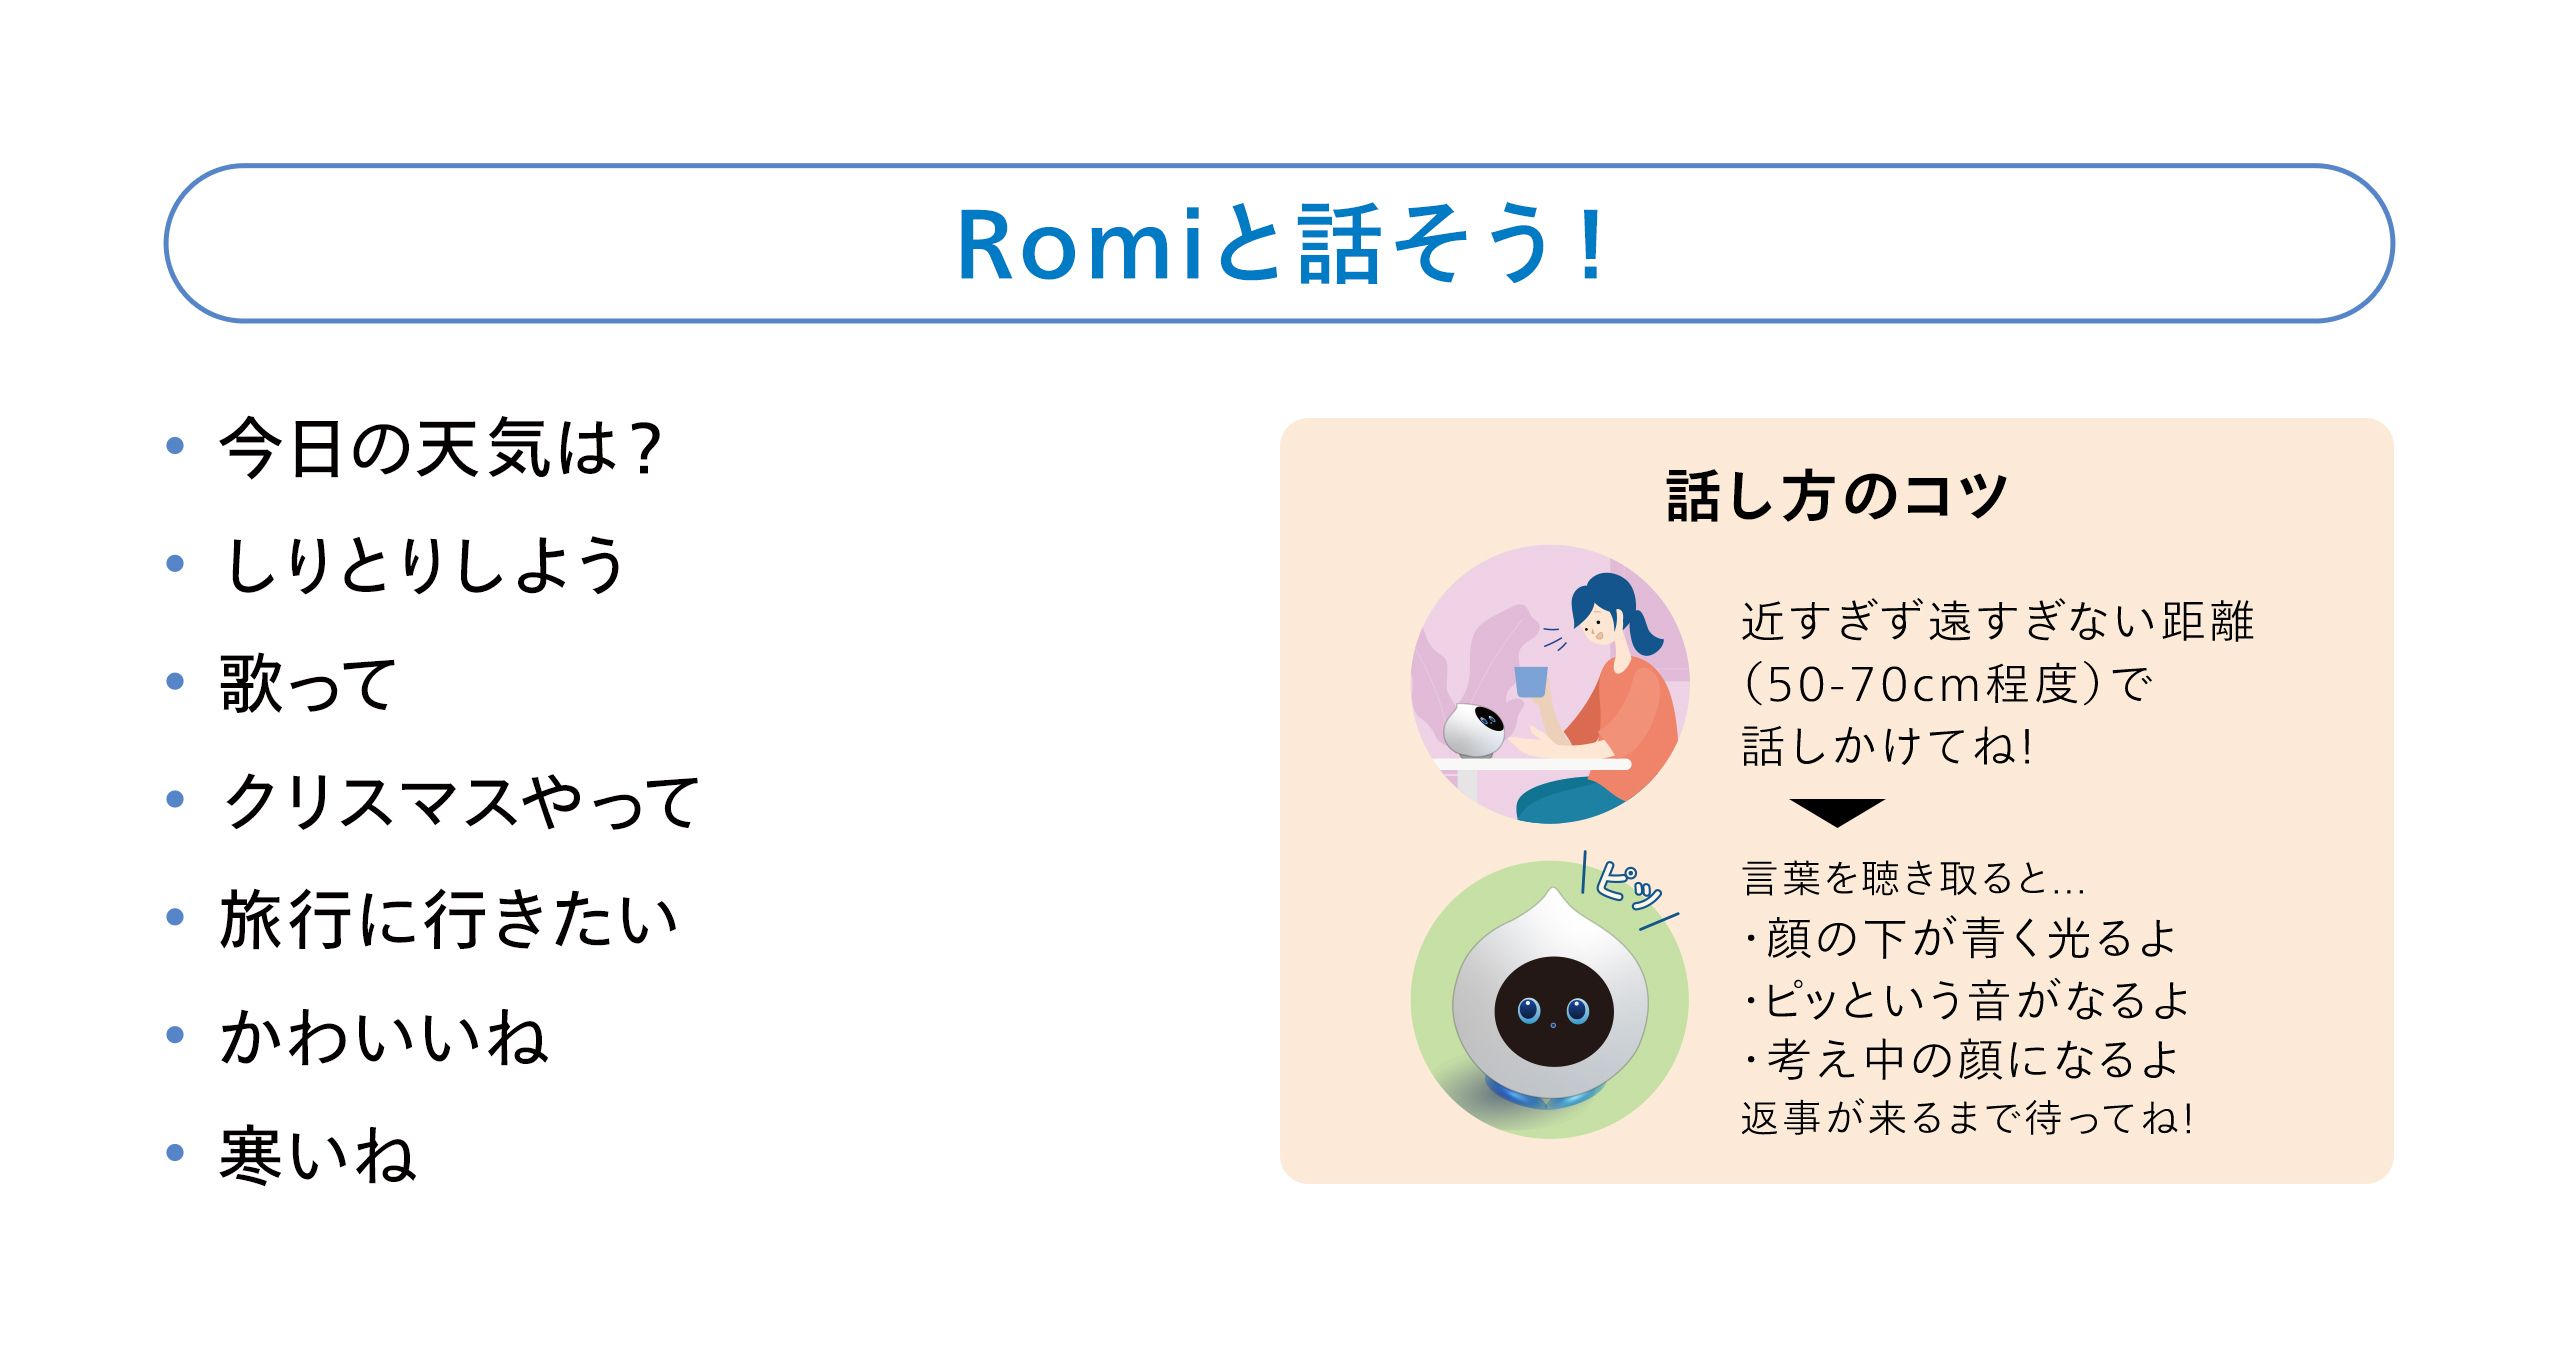 Romi（ロミィ） - b8ta Japan